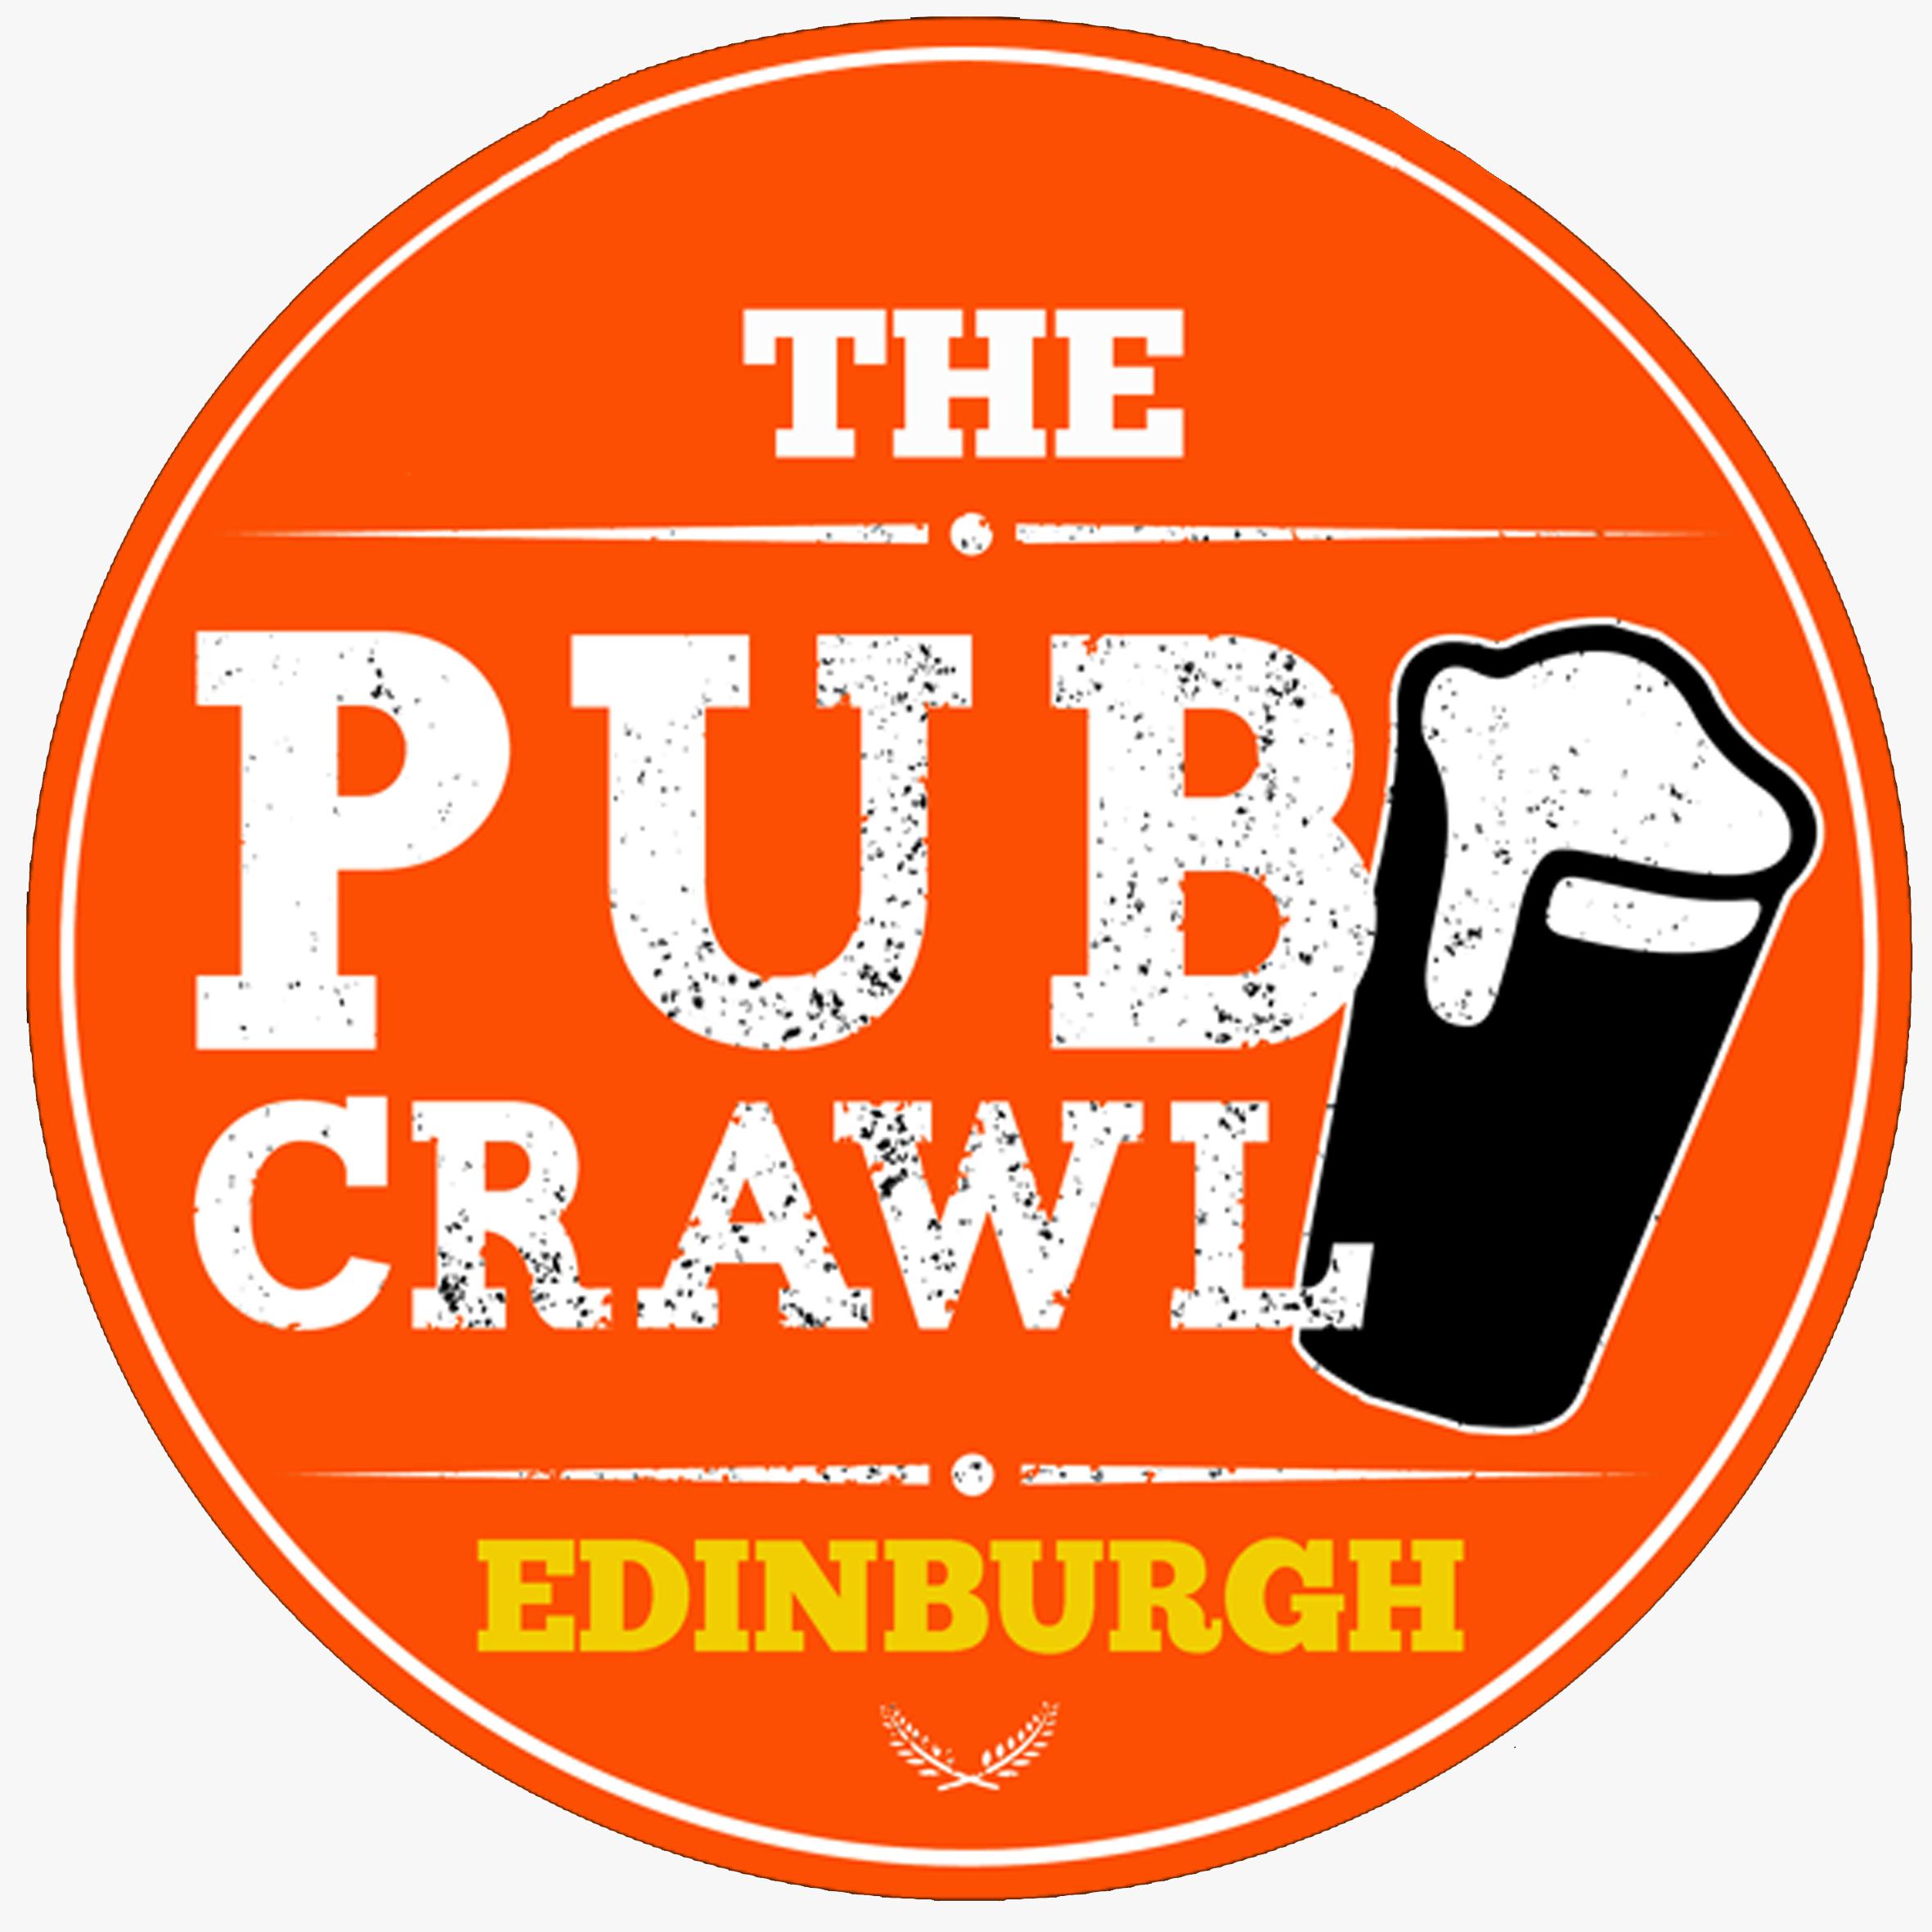 The Edinburgh Pub Crawl